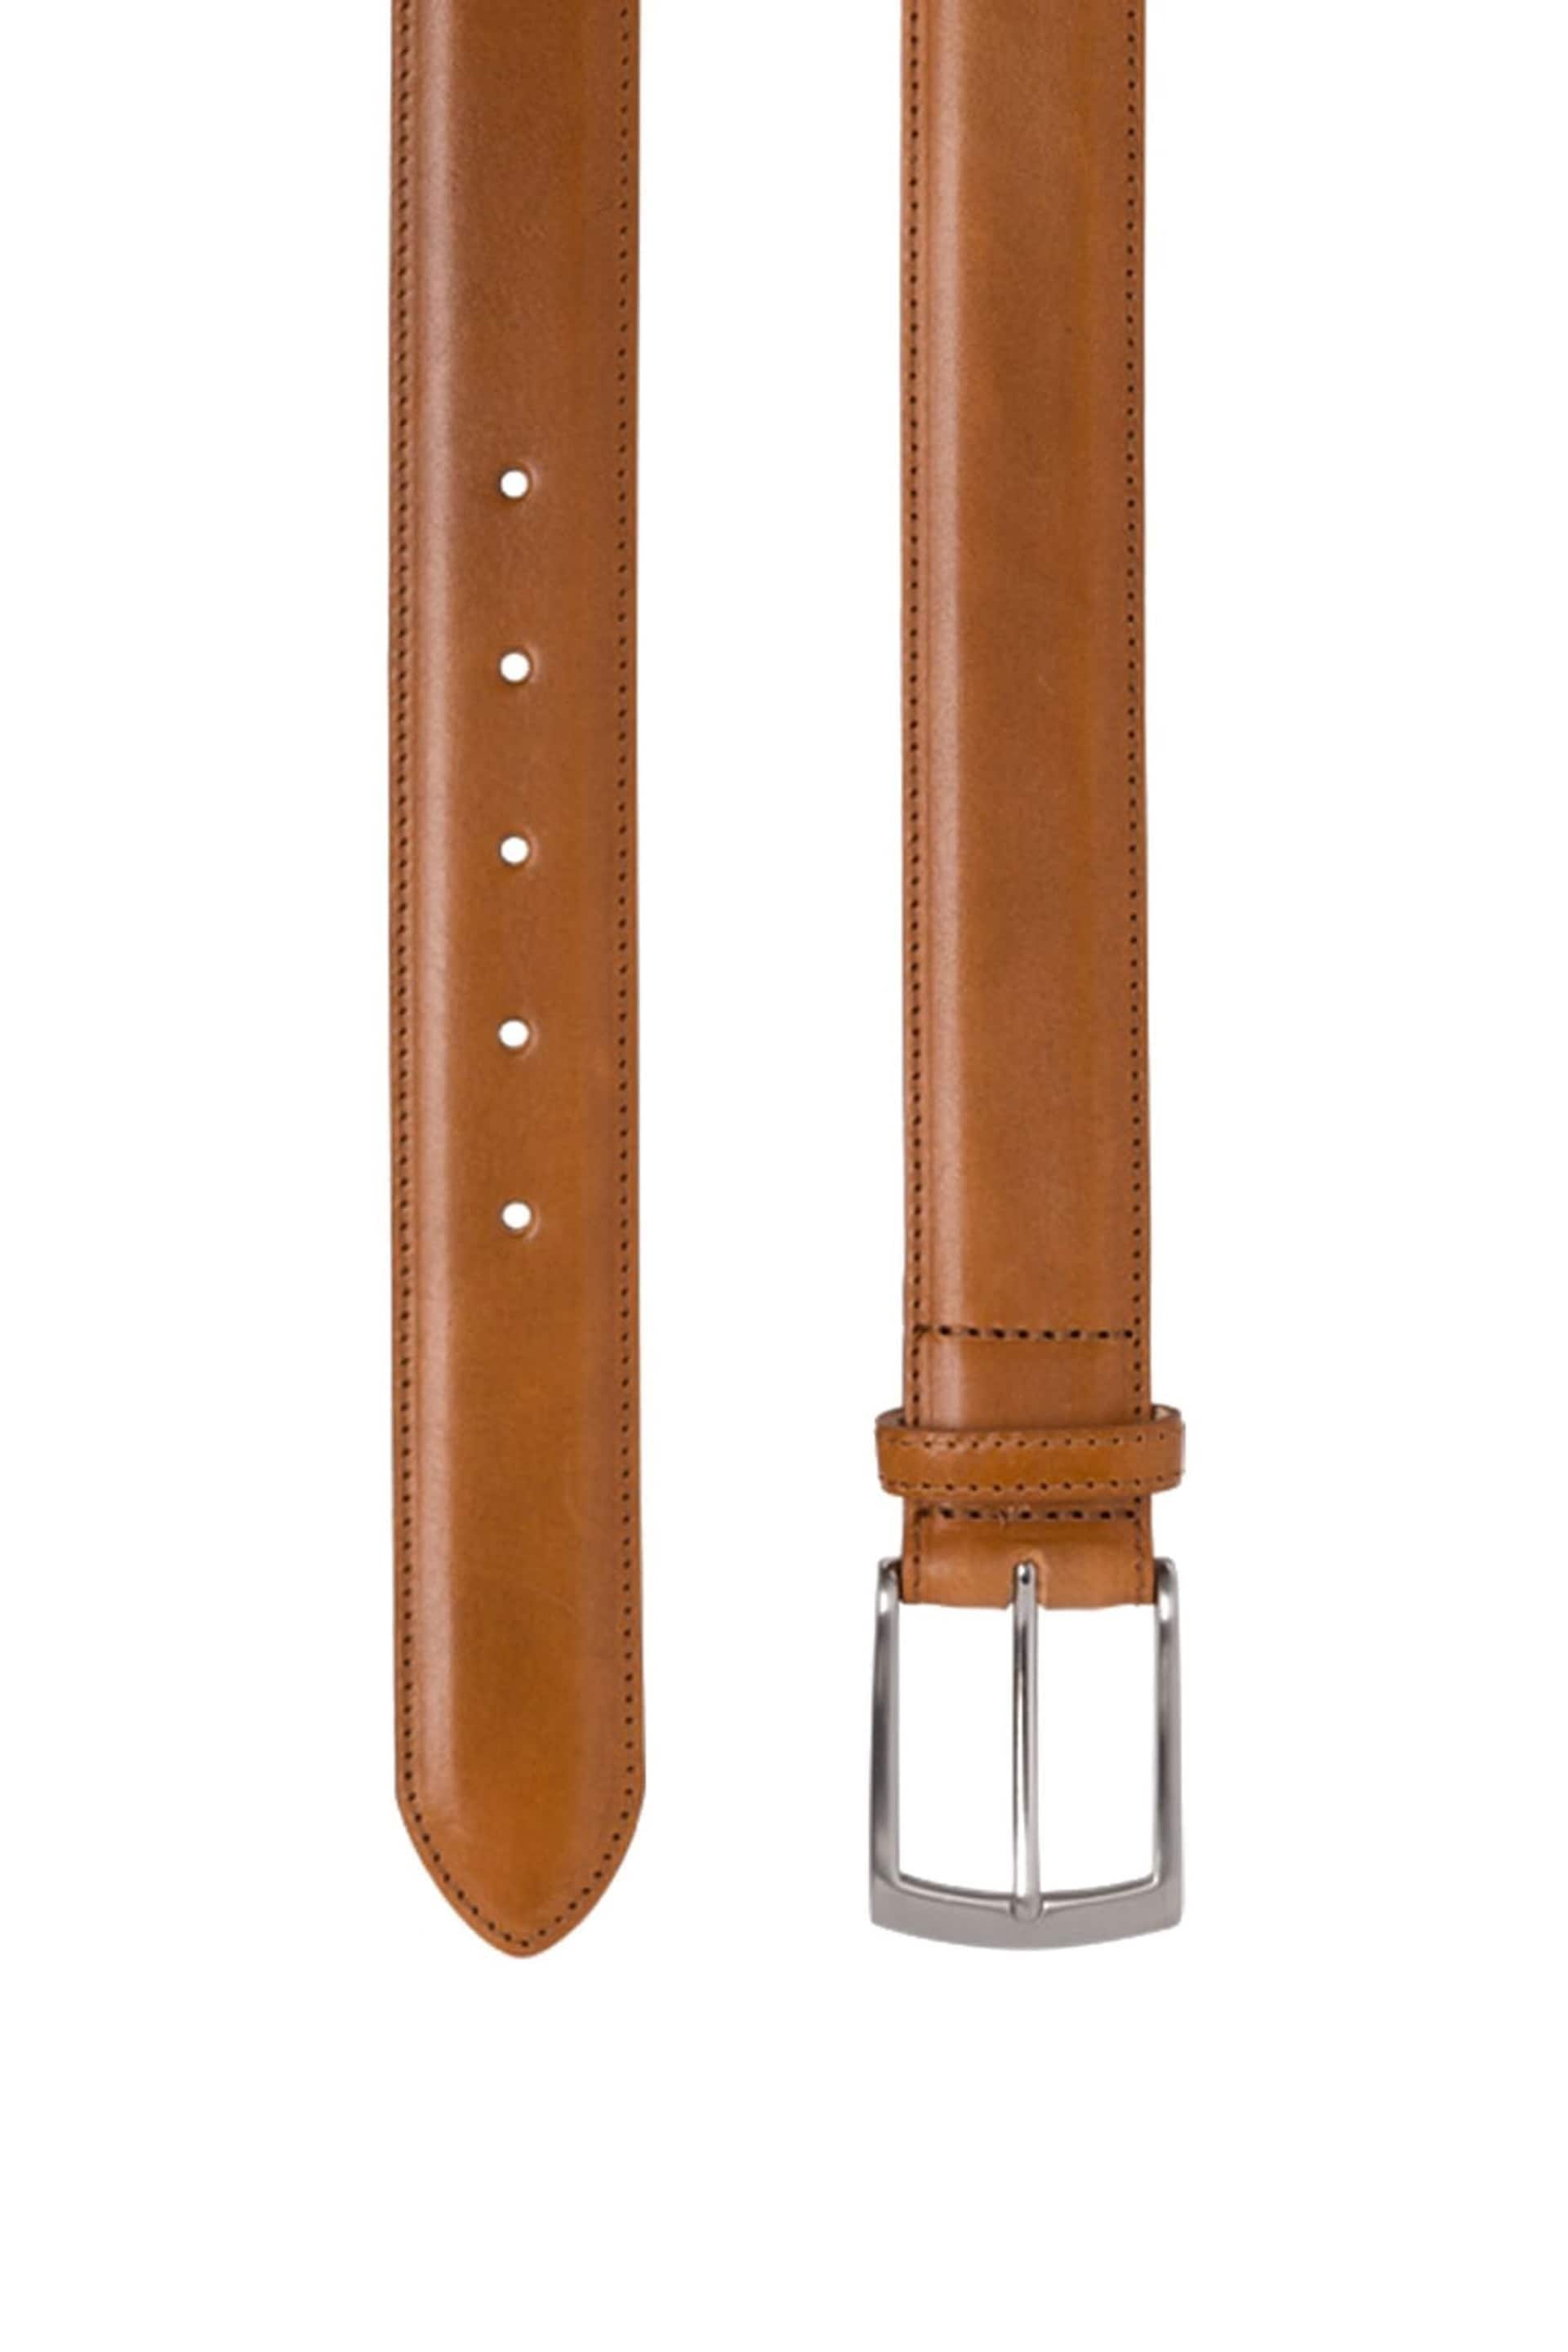 Loake Henry Leather Belt - Image 2 of 2